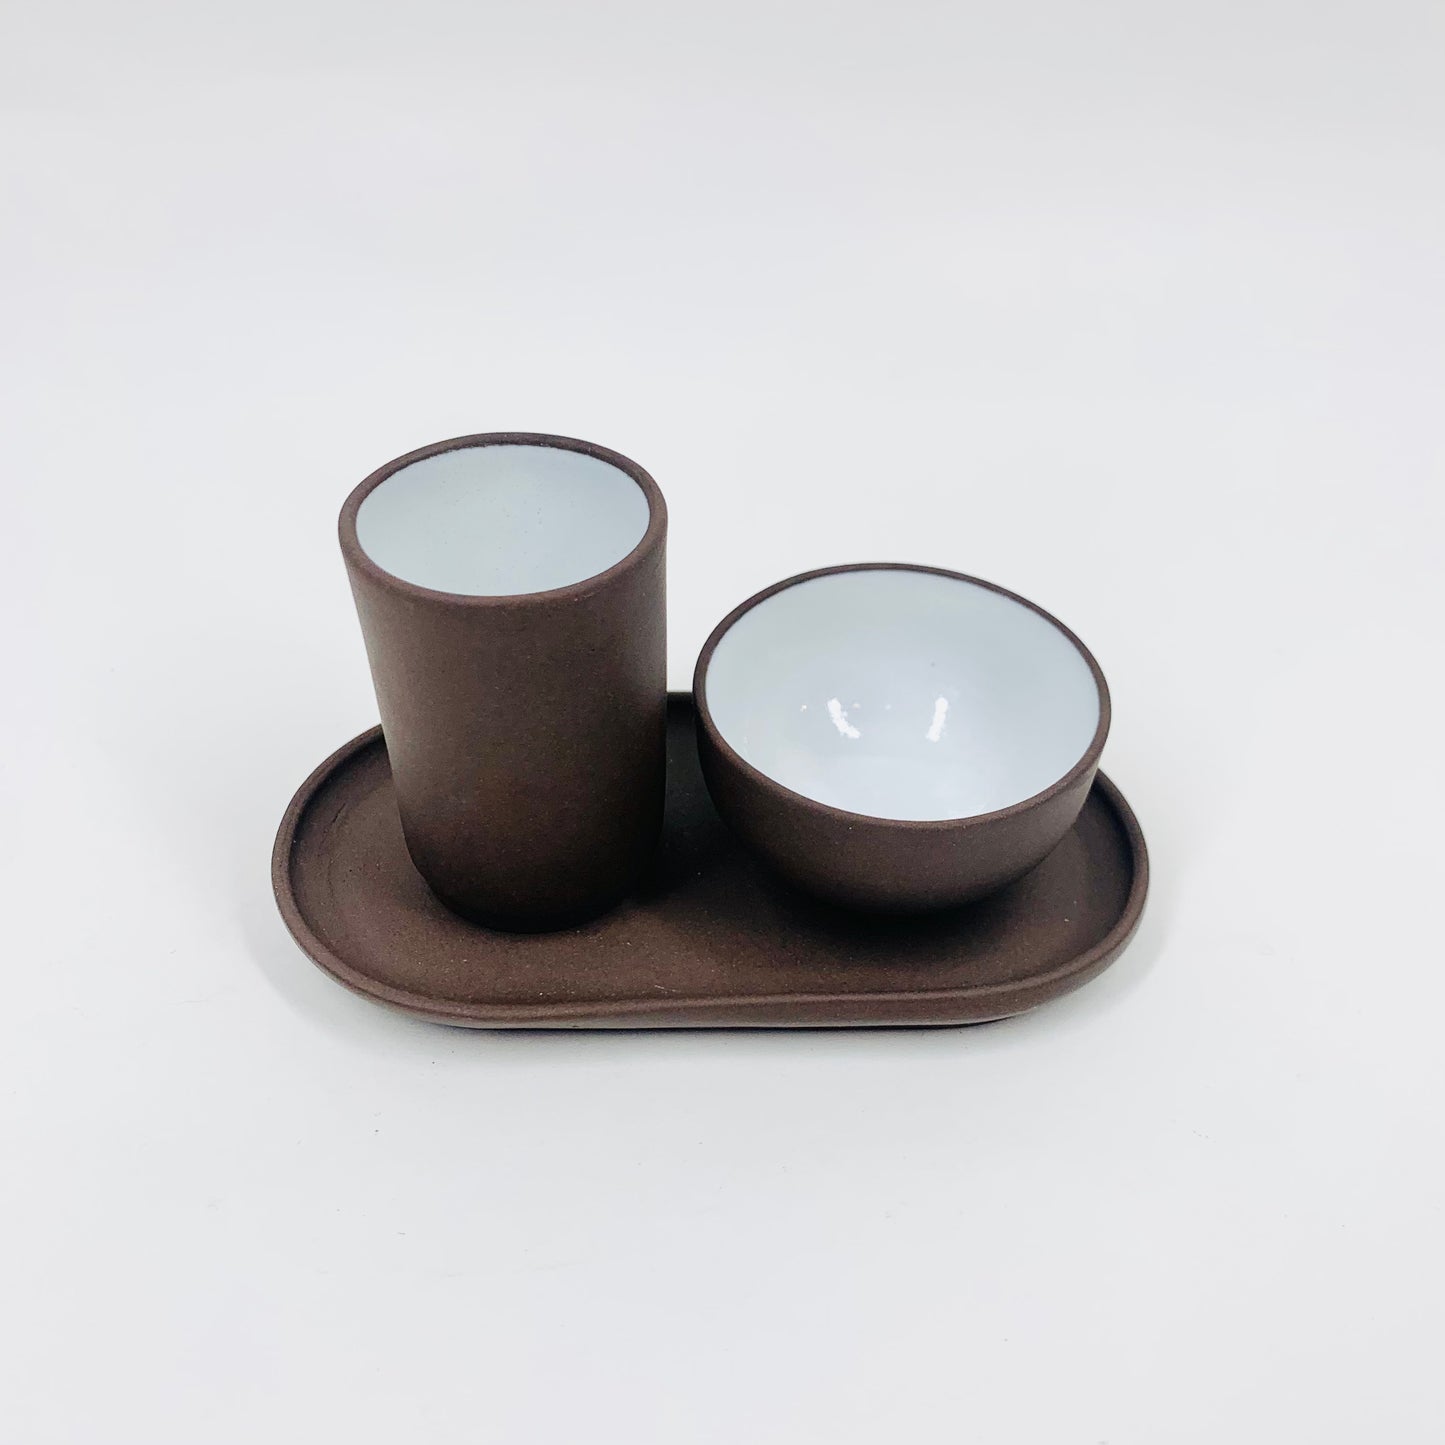 Rare Midcentury Japanese brown pottery condiment set